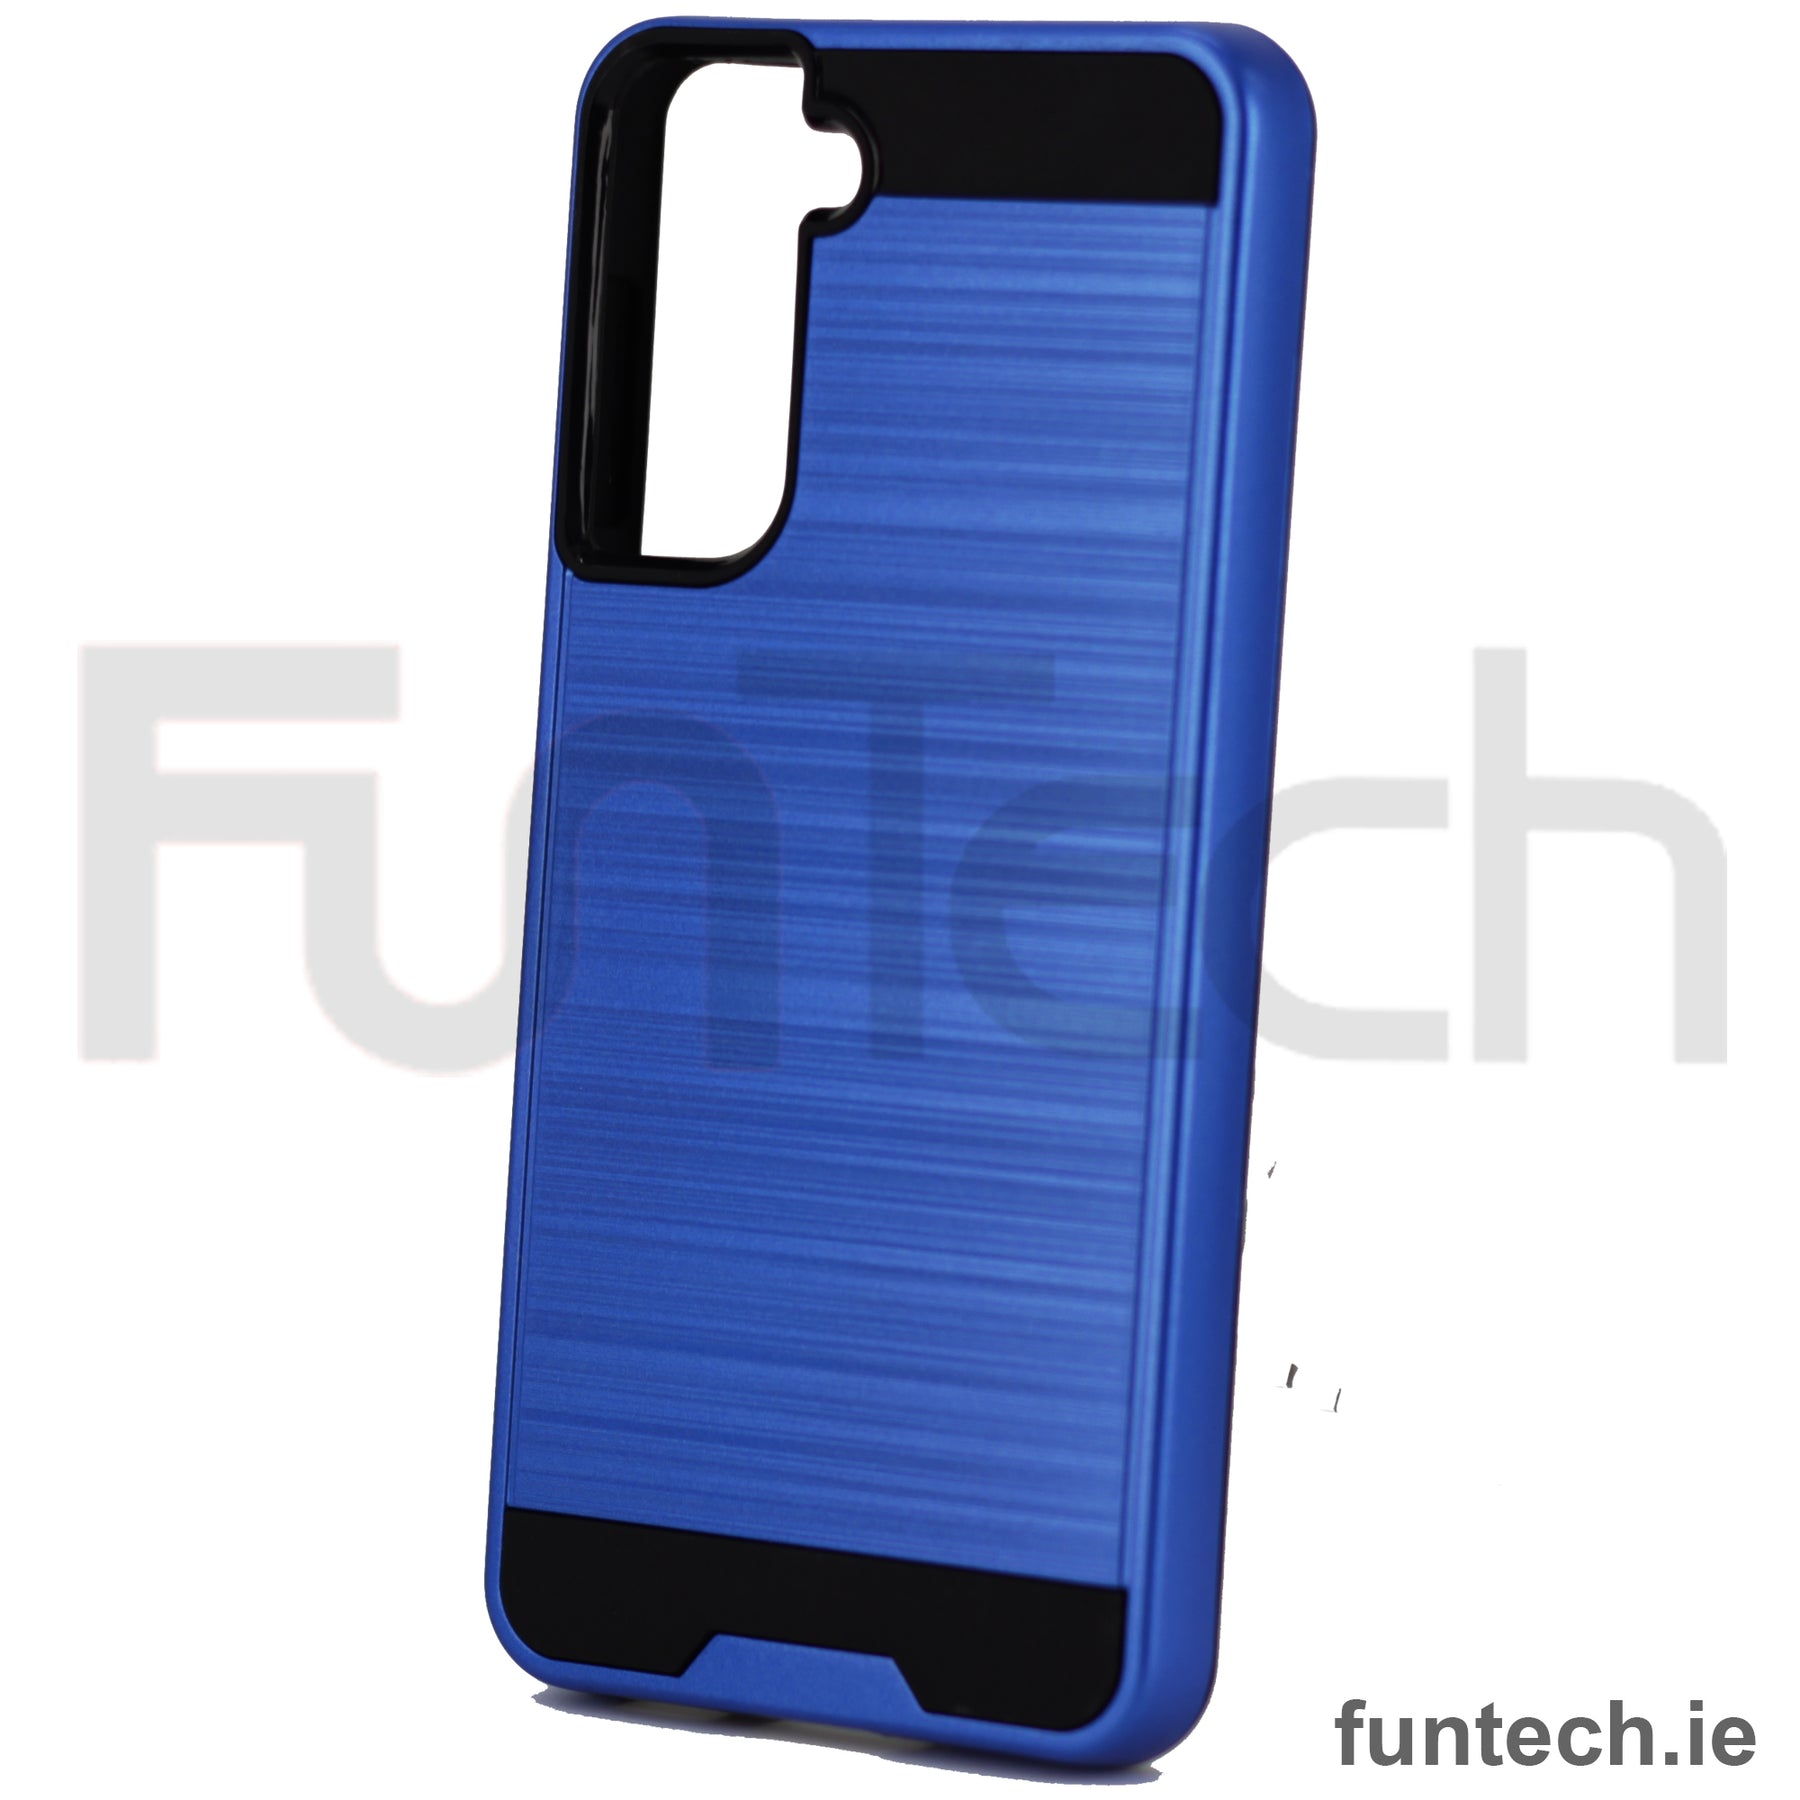 Samsung Case, Color Blue.